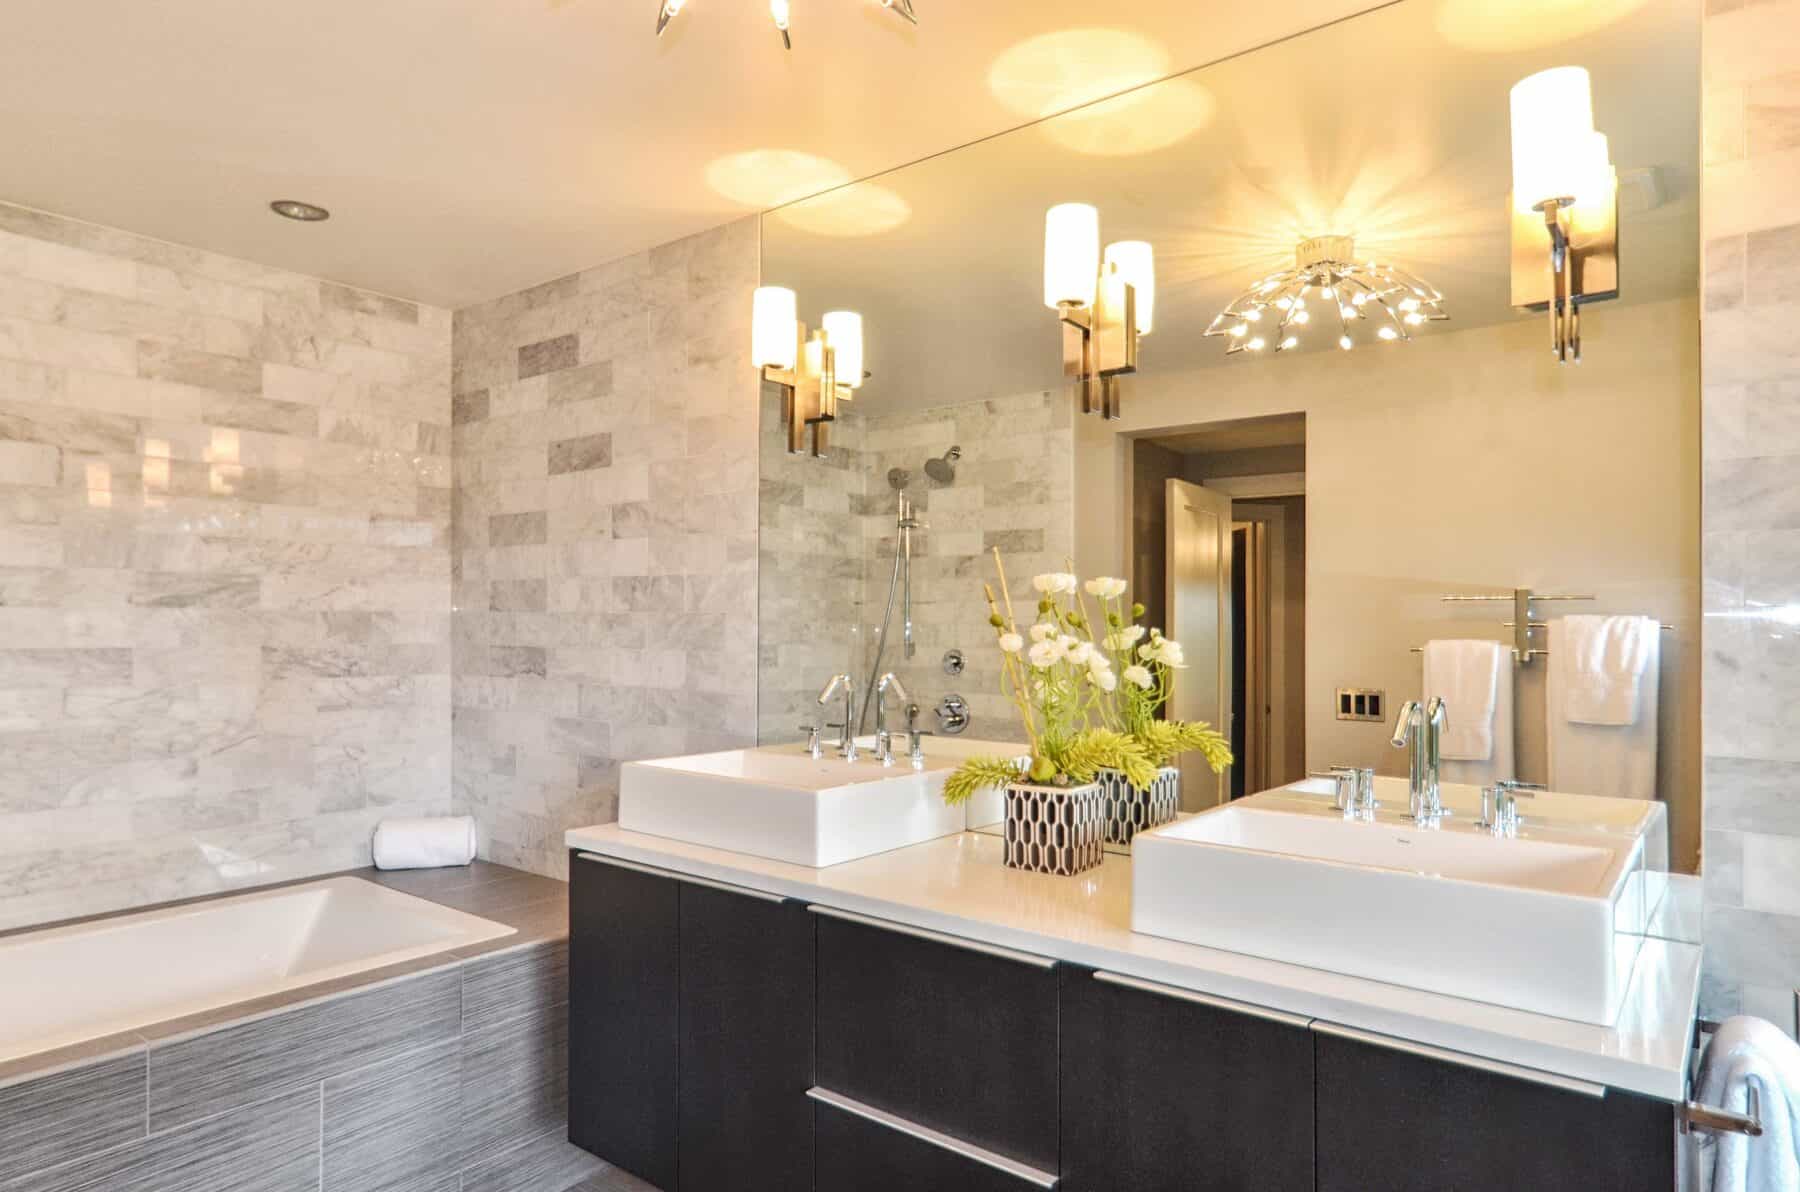 Carrera Marble and Porcelain Bathroom in Aspen, Colorado Custom Home. Luxury Home Building Interiors